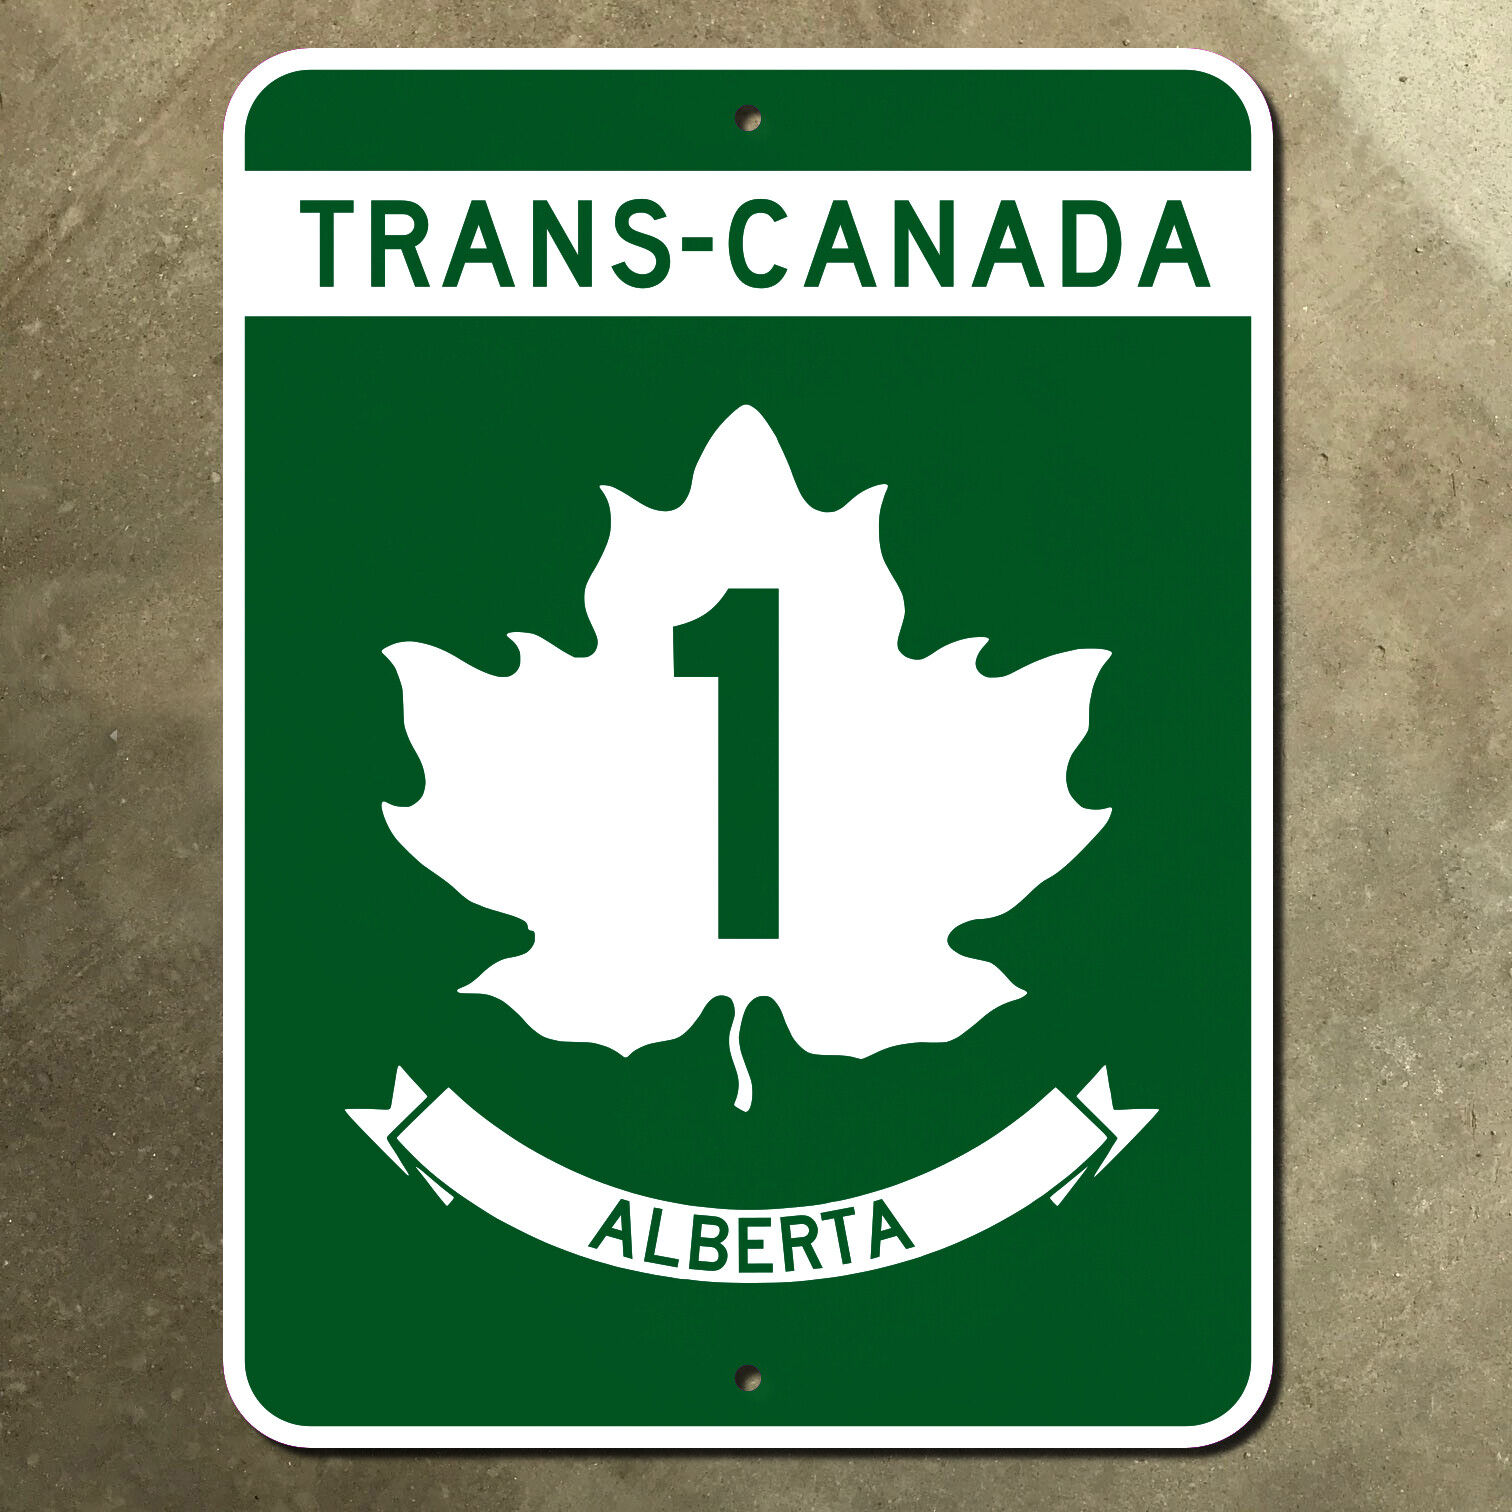 Canada Alberta Trans-Canada Highway 1 Calgary marker road sign 1980s 9x12